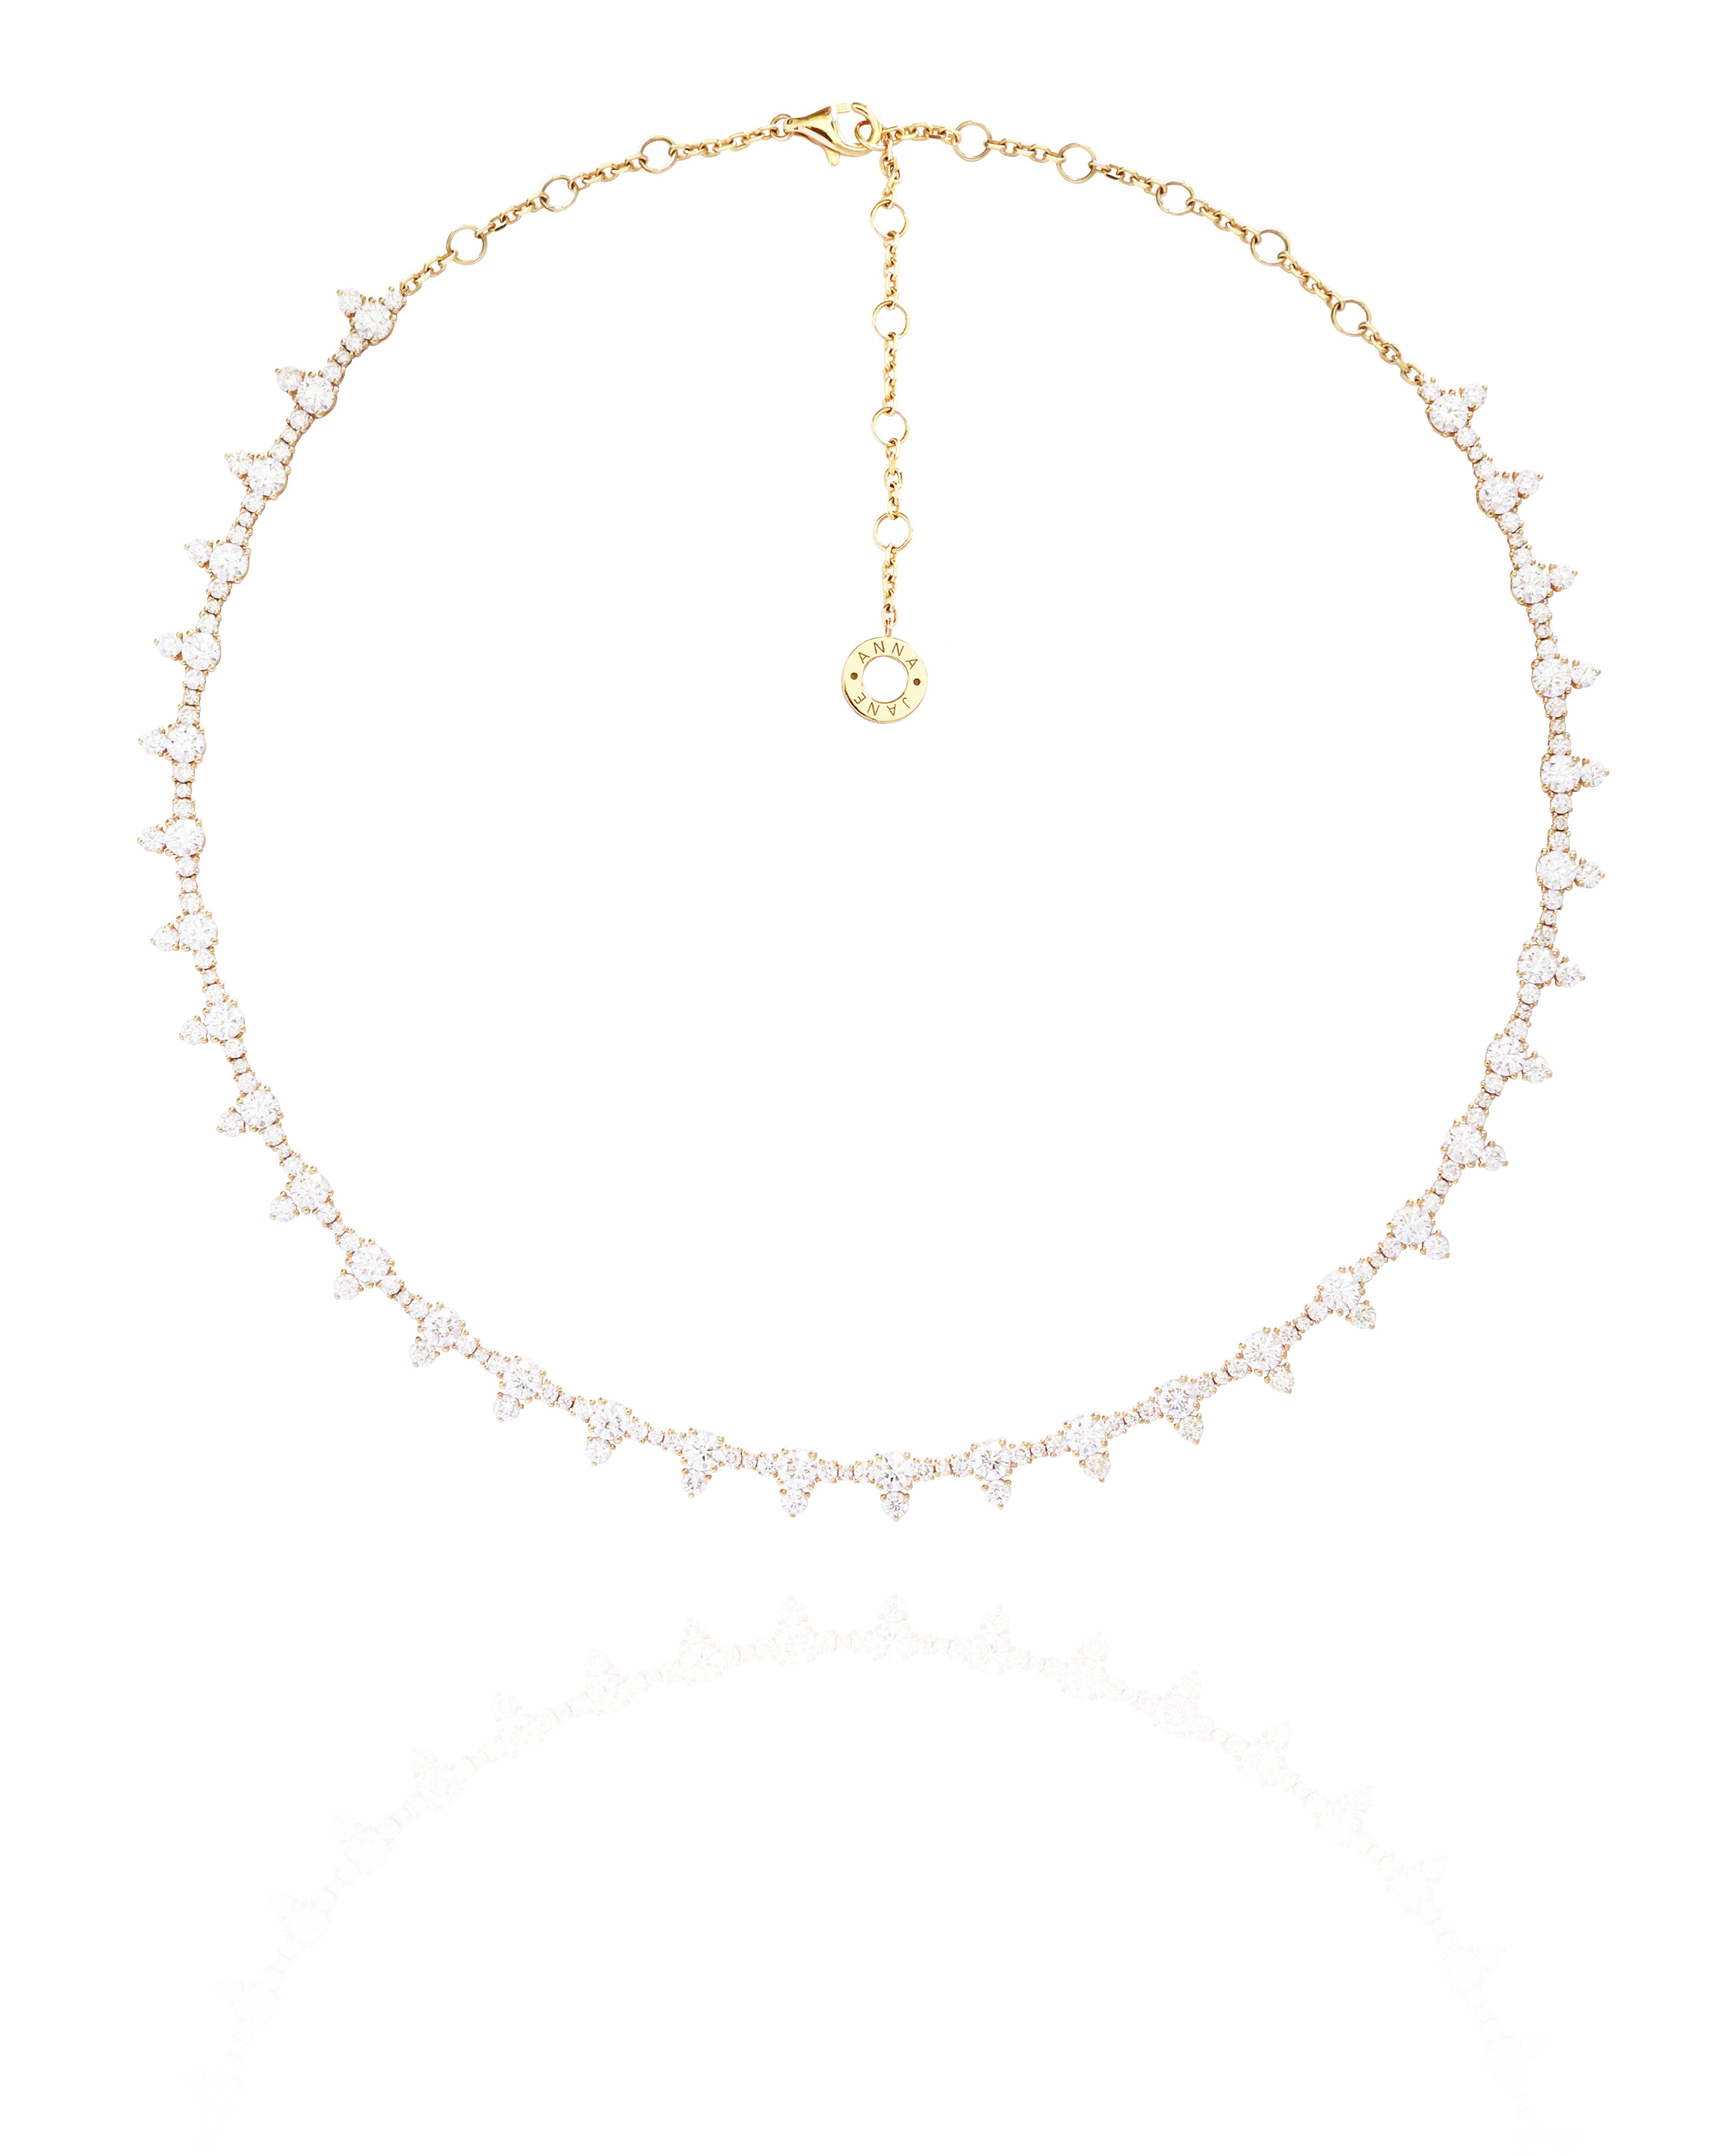 Adaline Diamond Necklace in White Gold